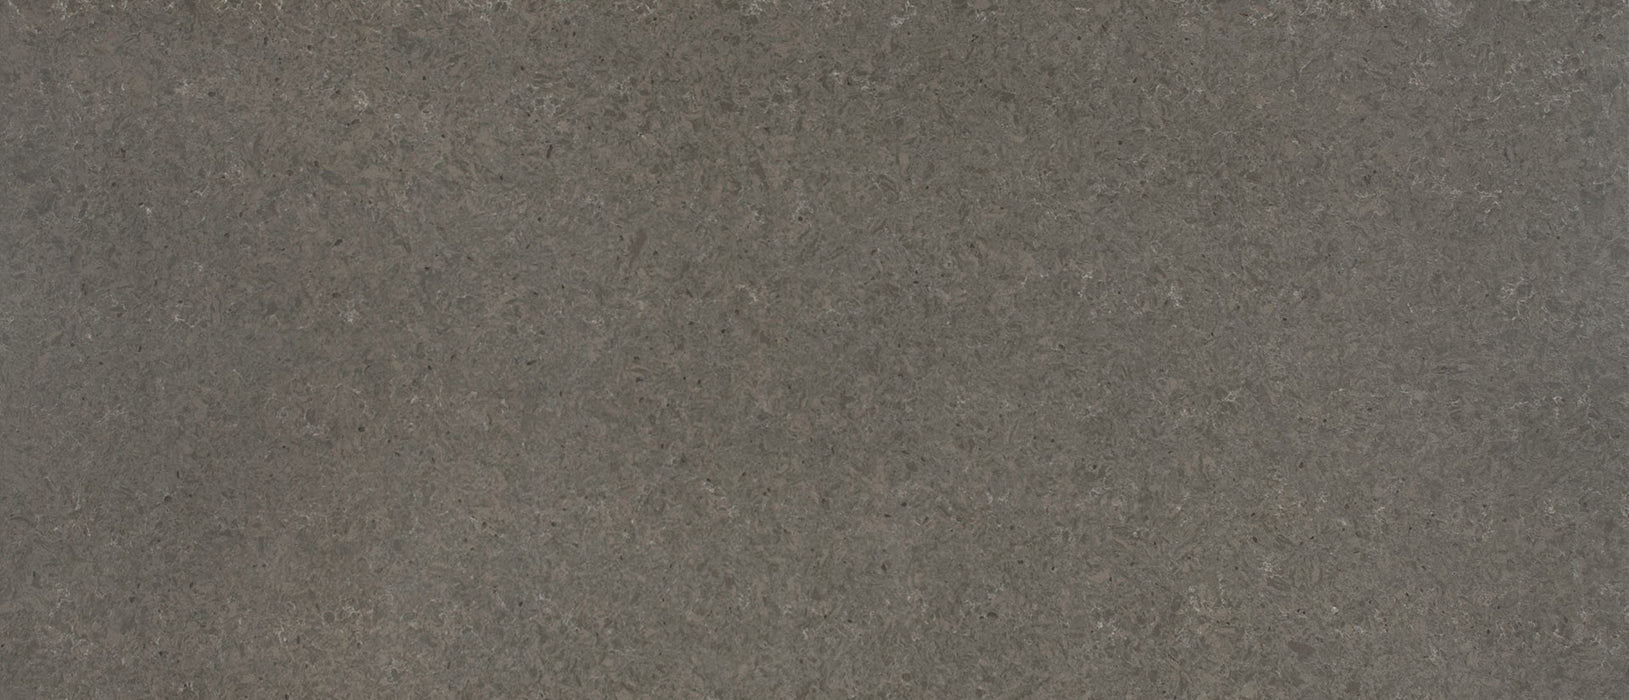 Babylon gray quartz countertop slab